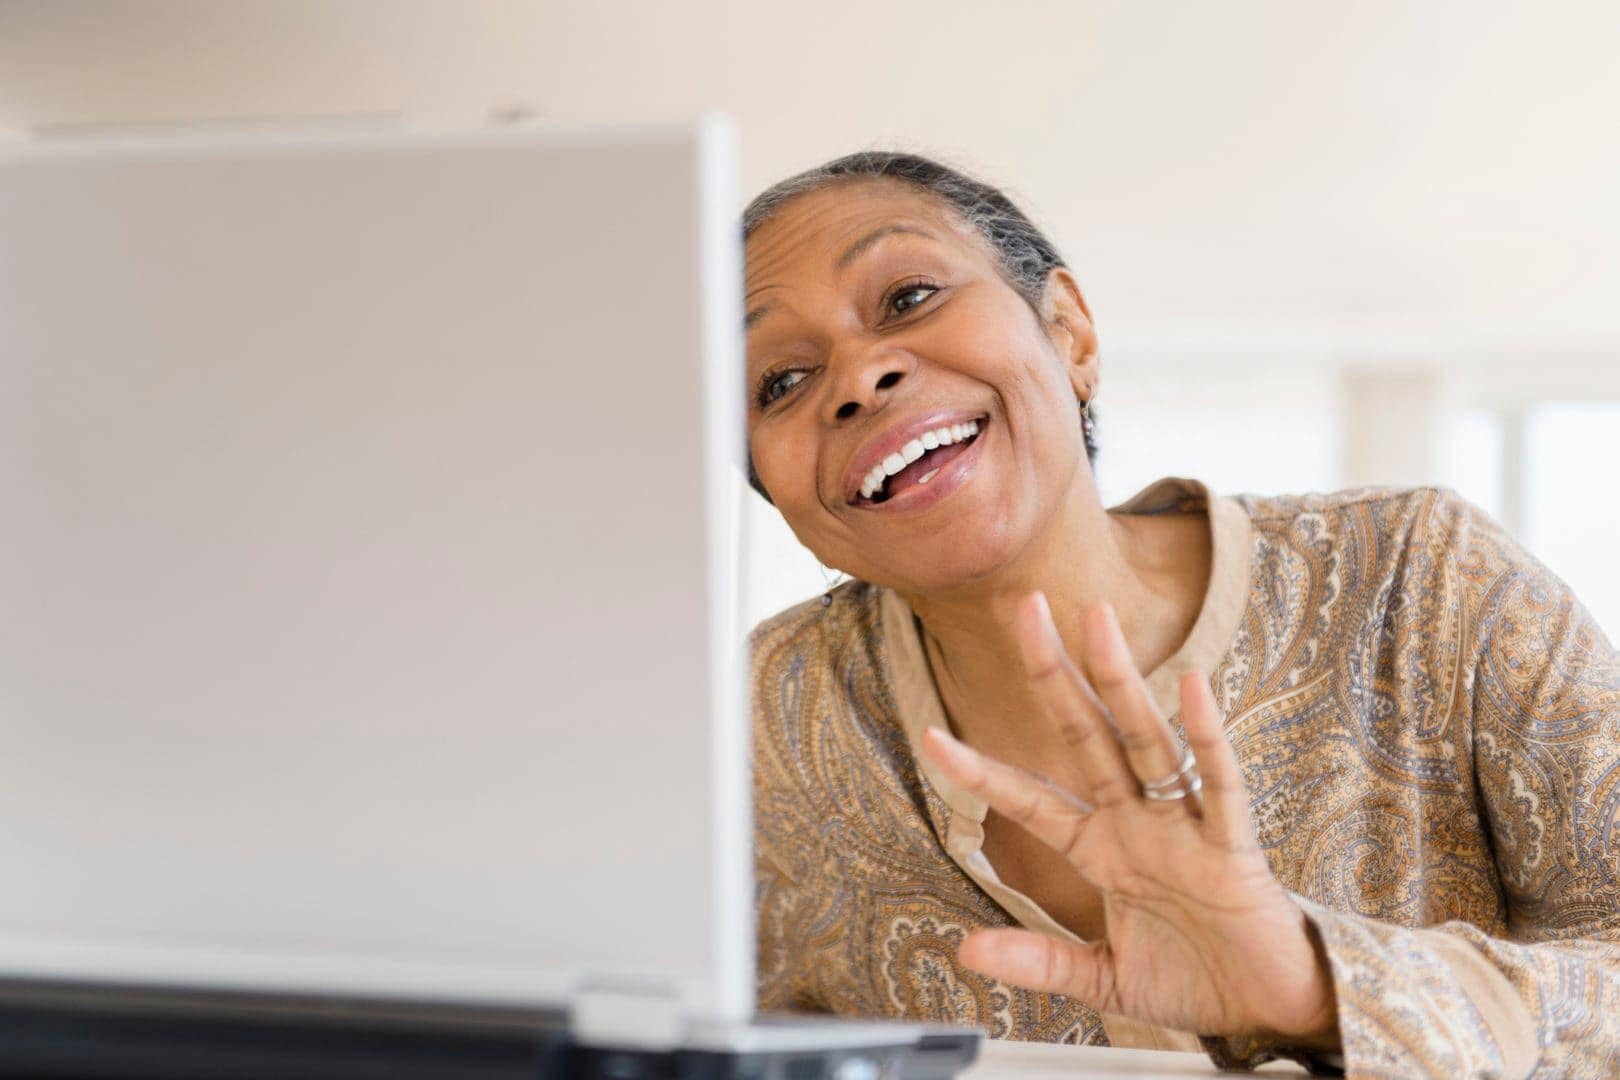 Online Dating for Seniors: Safety Tips for Older Adults & Caregivers